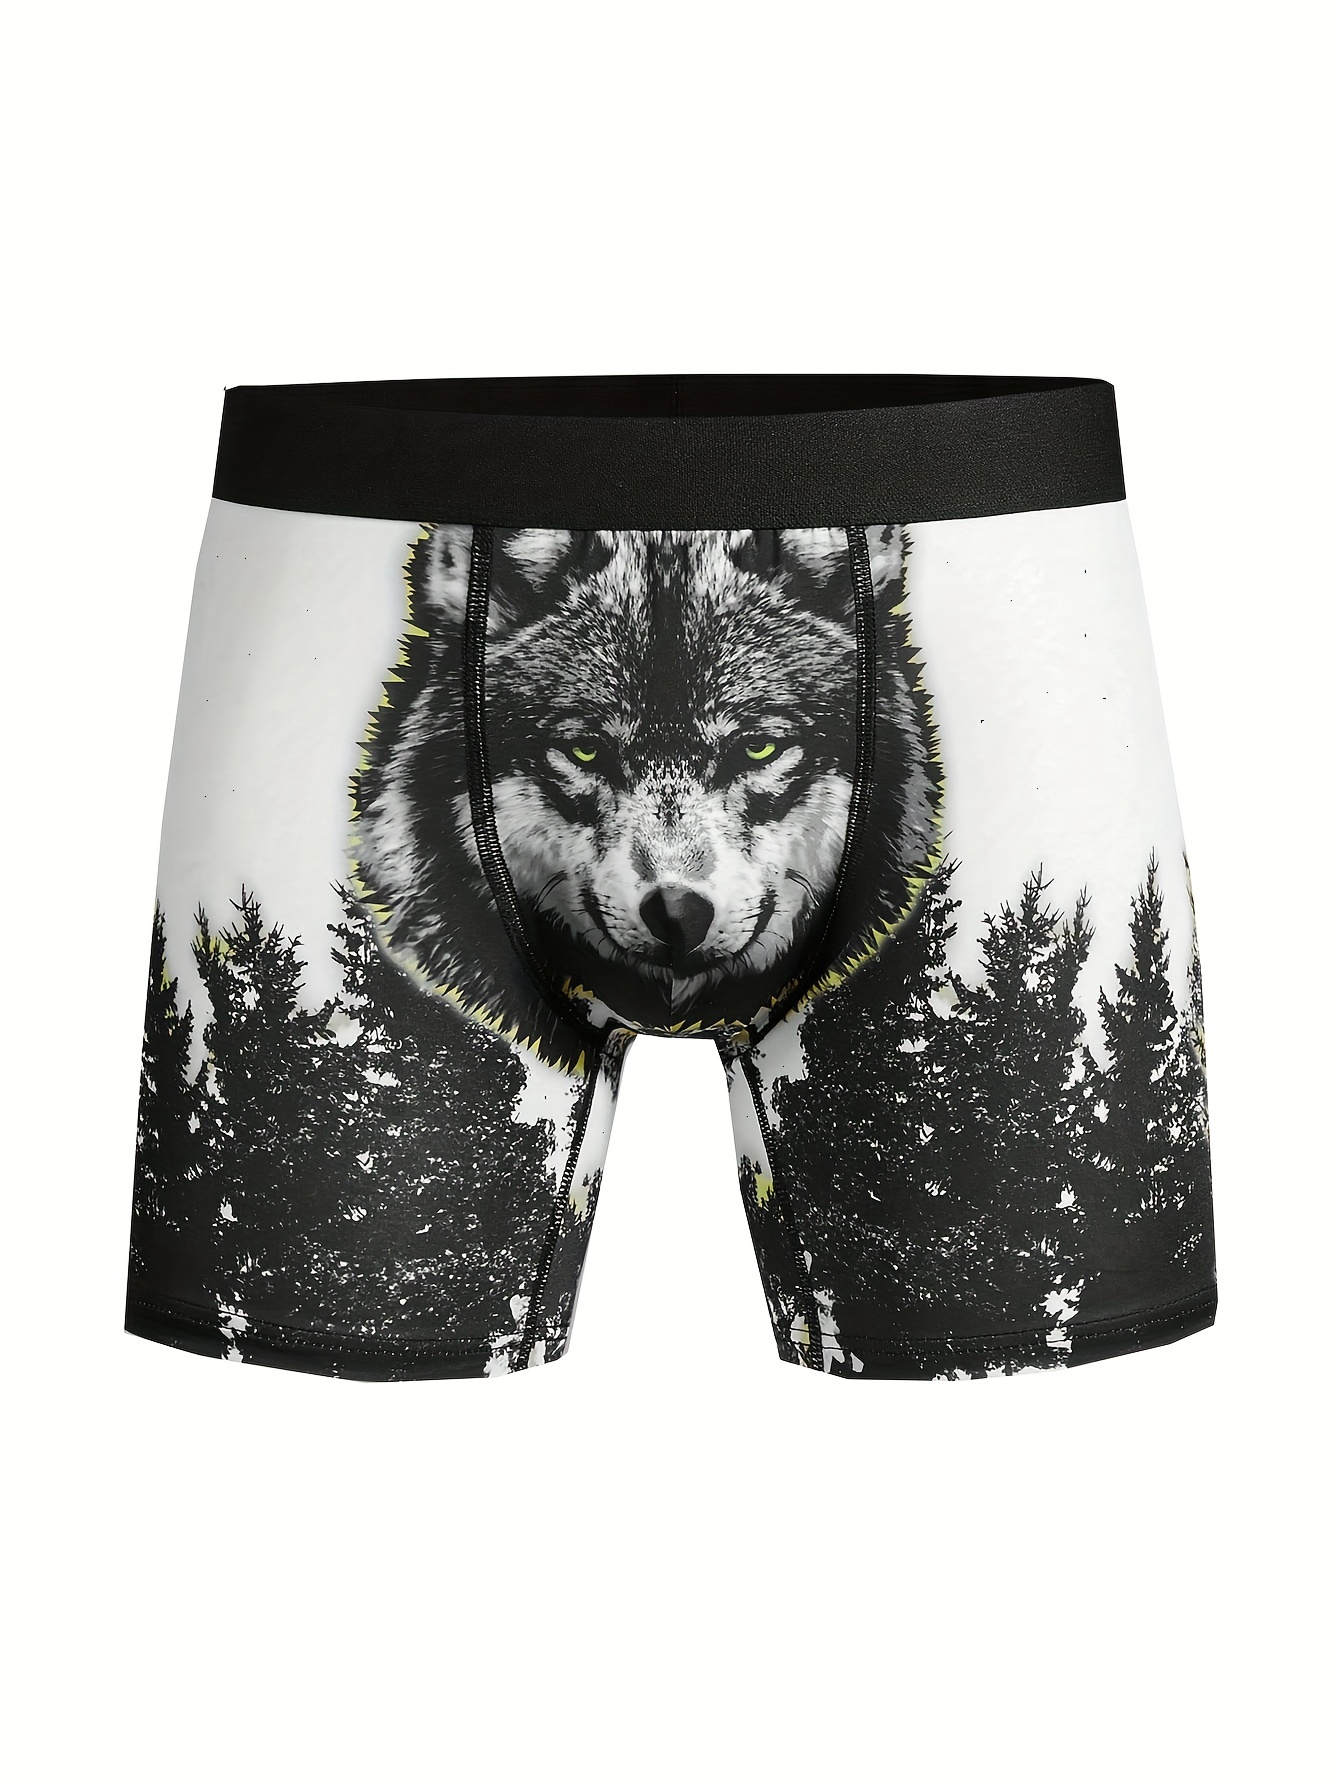 Sexy Funny Male Underwear 3D Wolf Boxer Shorts Men's Shorts U Pouch Briefs  Breathable Underwear Cotton Underpants